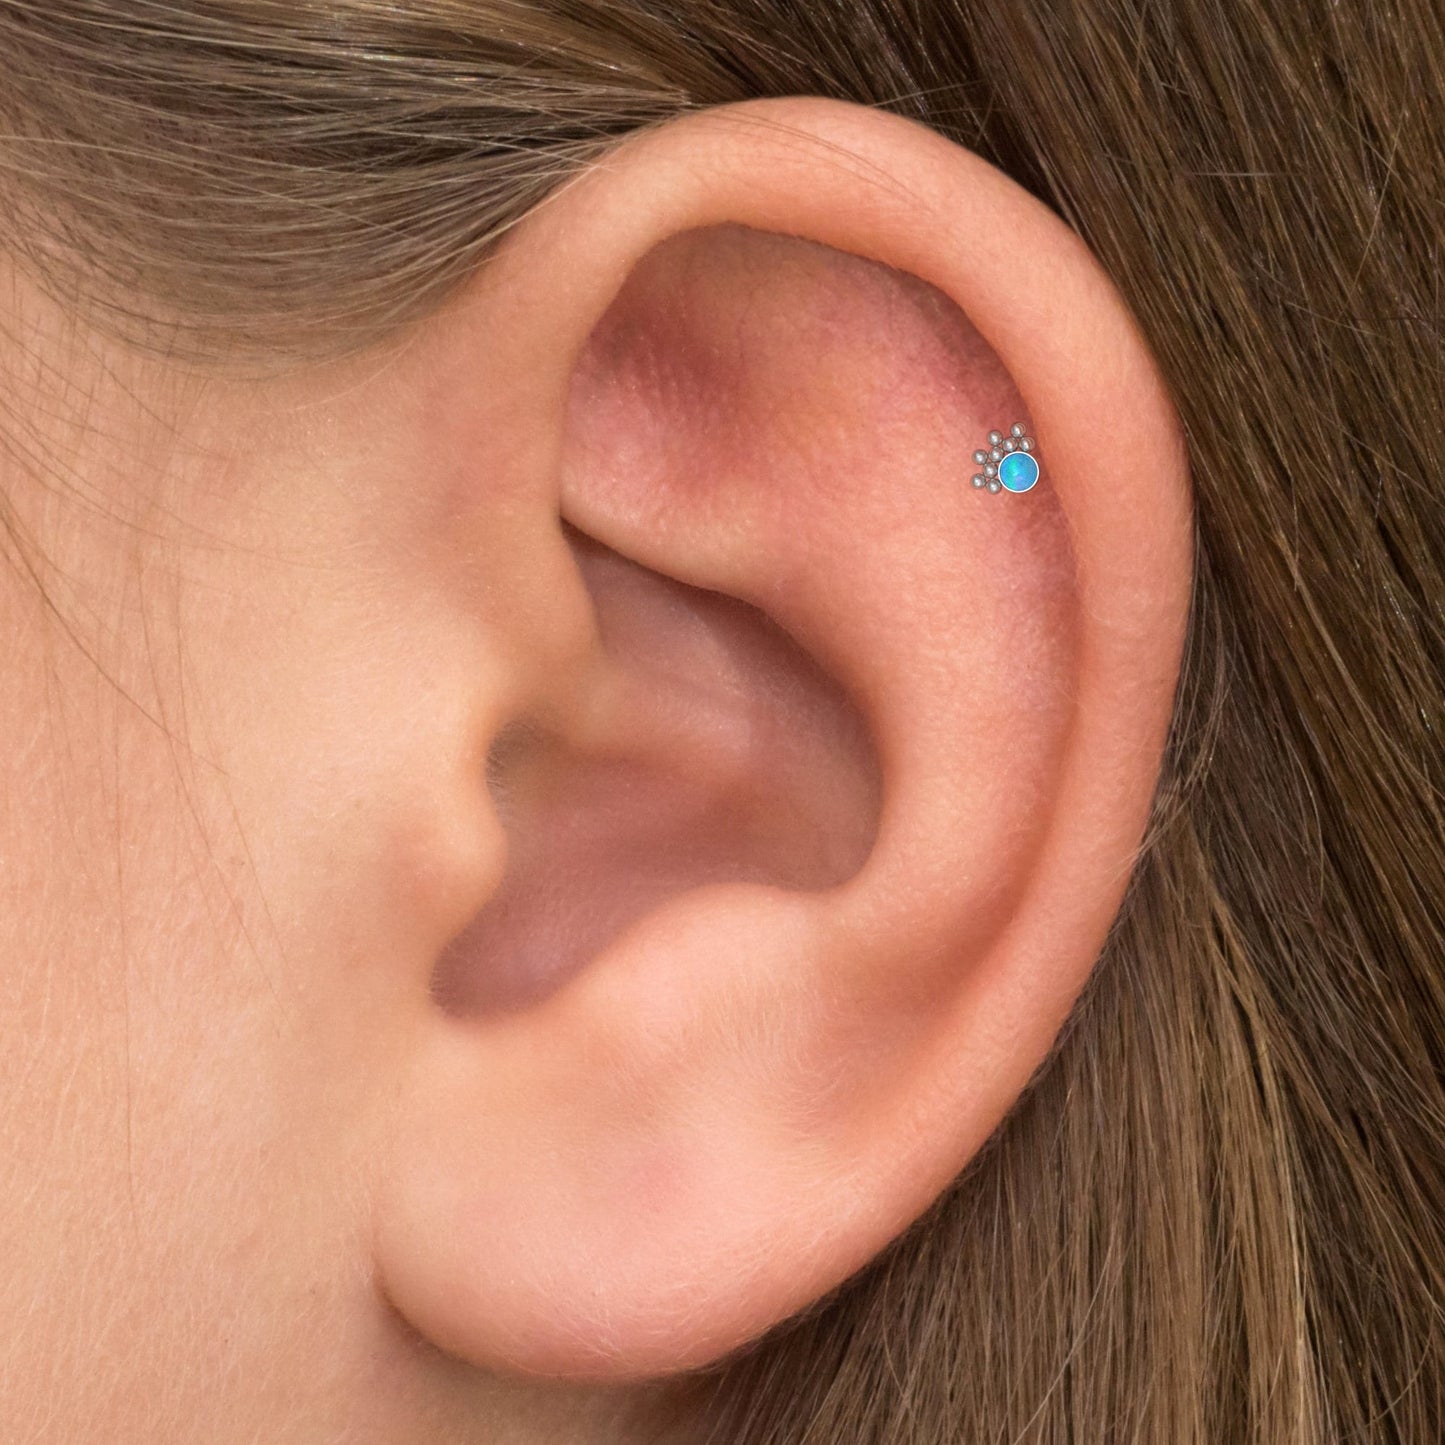 Surgical Steel Flat Back Tragus Earring Opal - TitaniumFashion